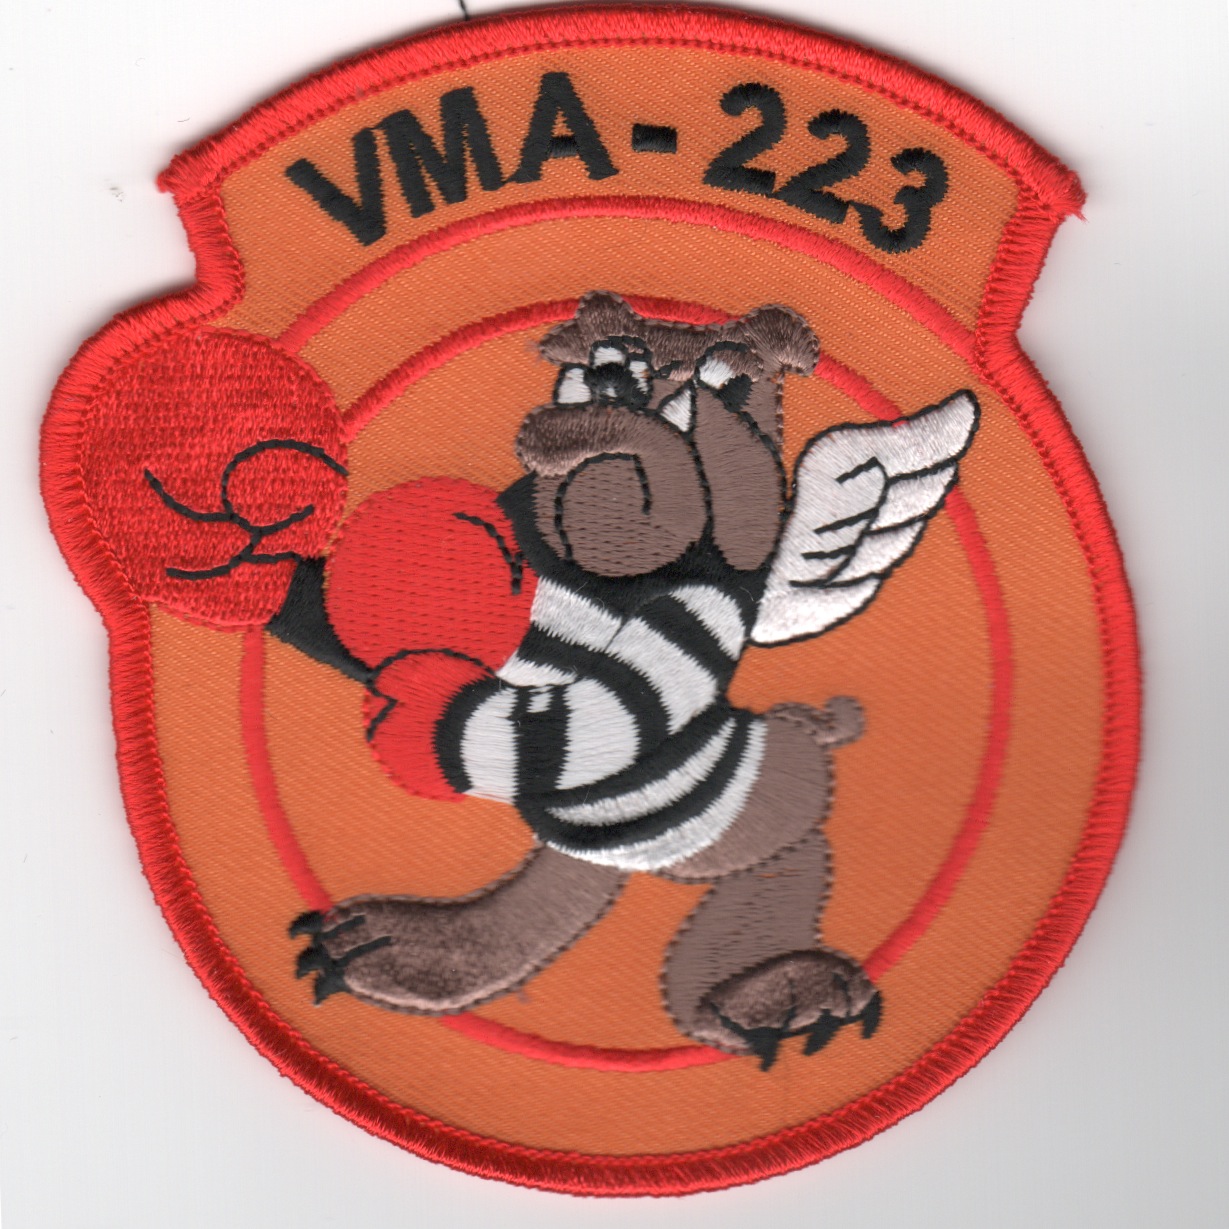 VMA-233 Squadron Patch Plastic Backing 